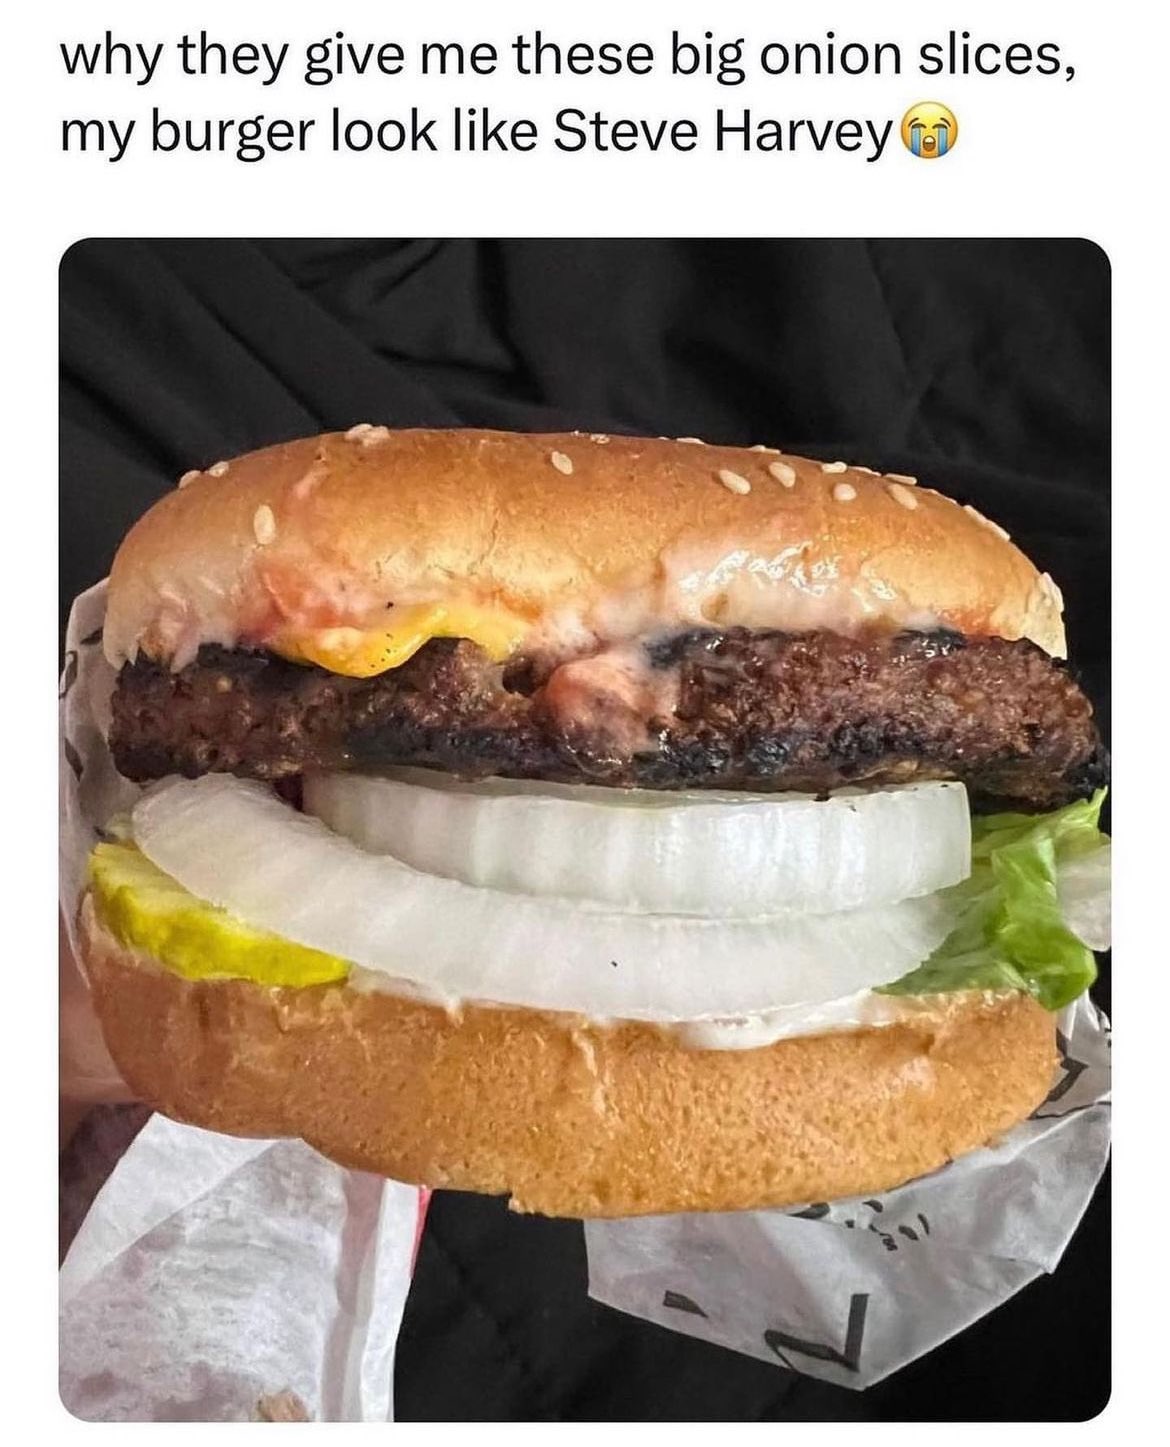 harvey-burger.jpg